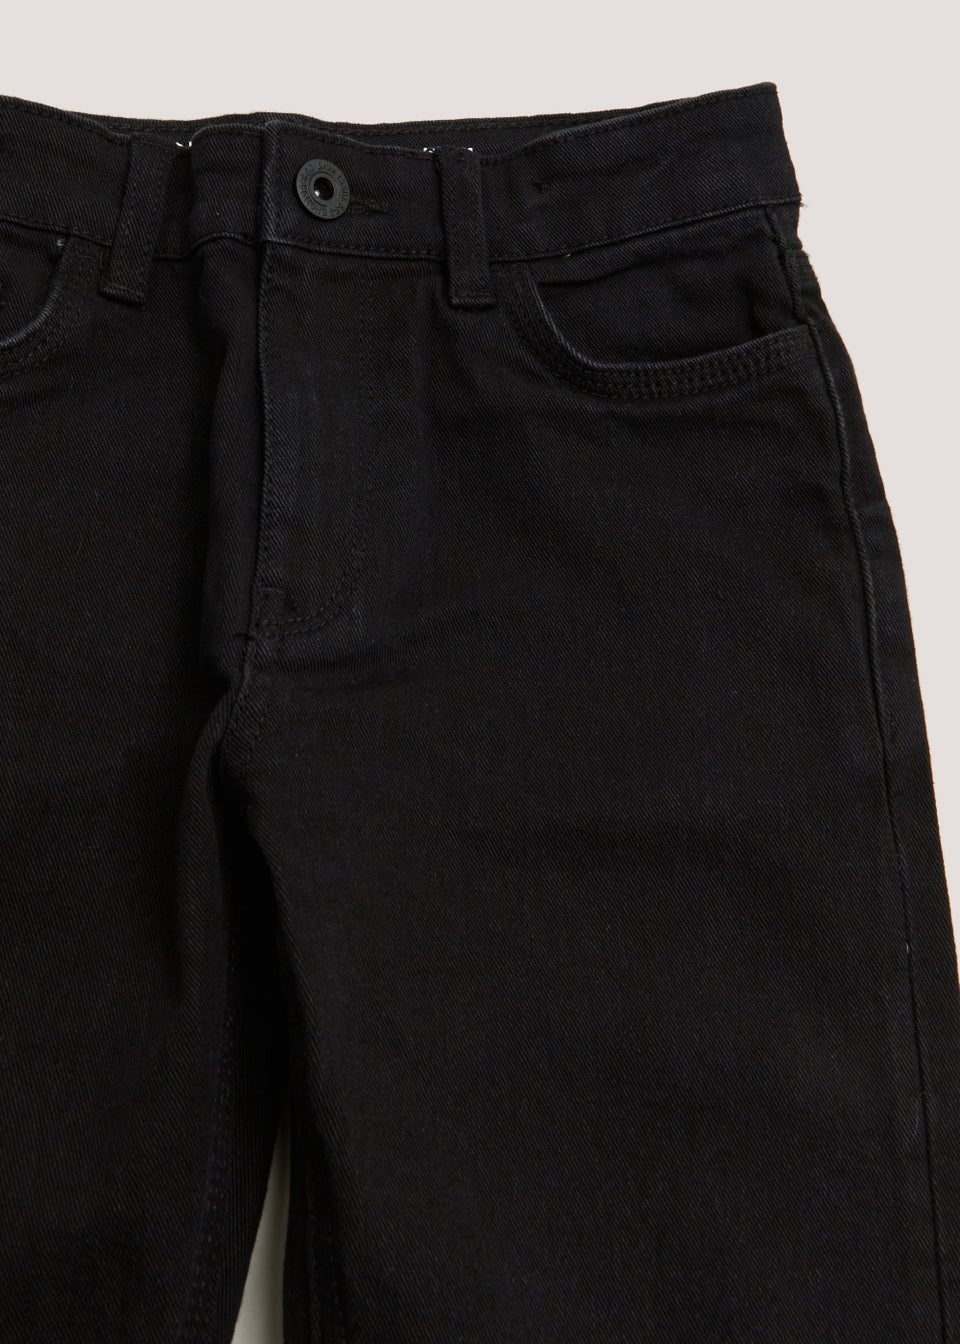 Boys Black Slim Fit Jeans (4-13yrs) - Matalan